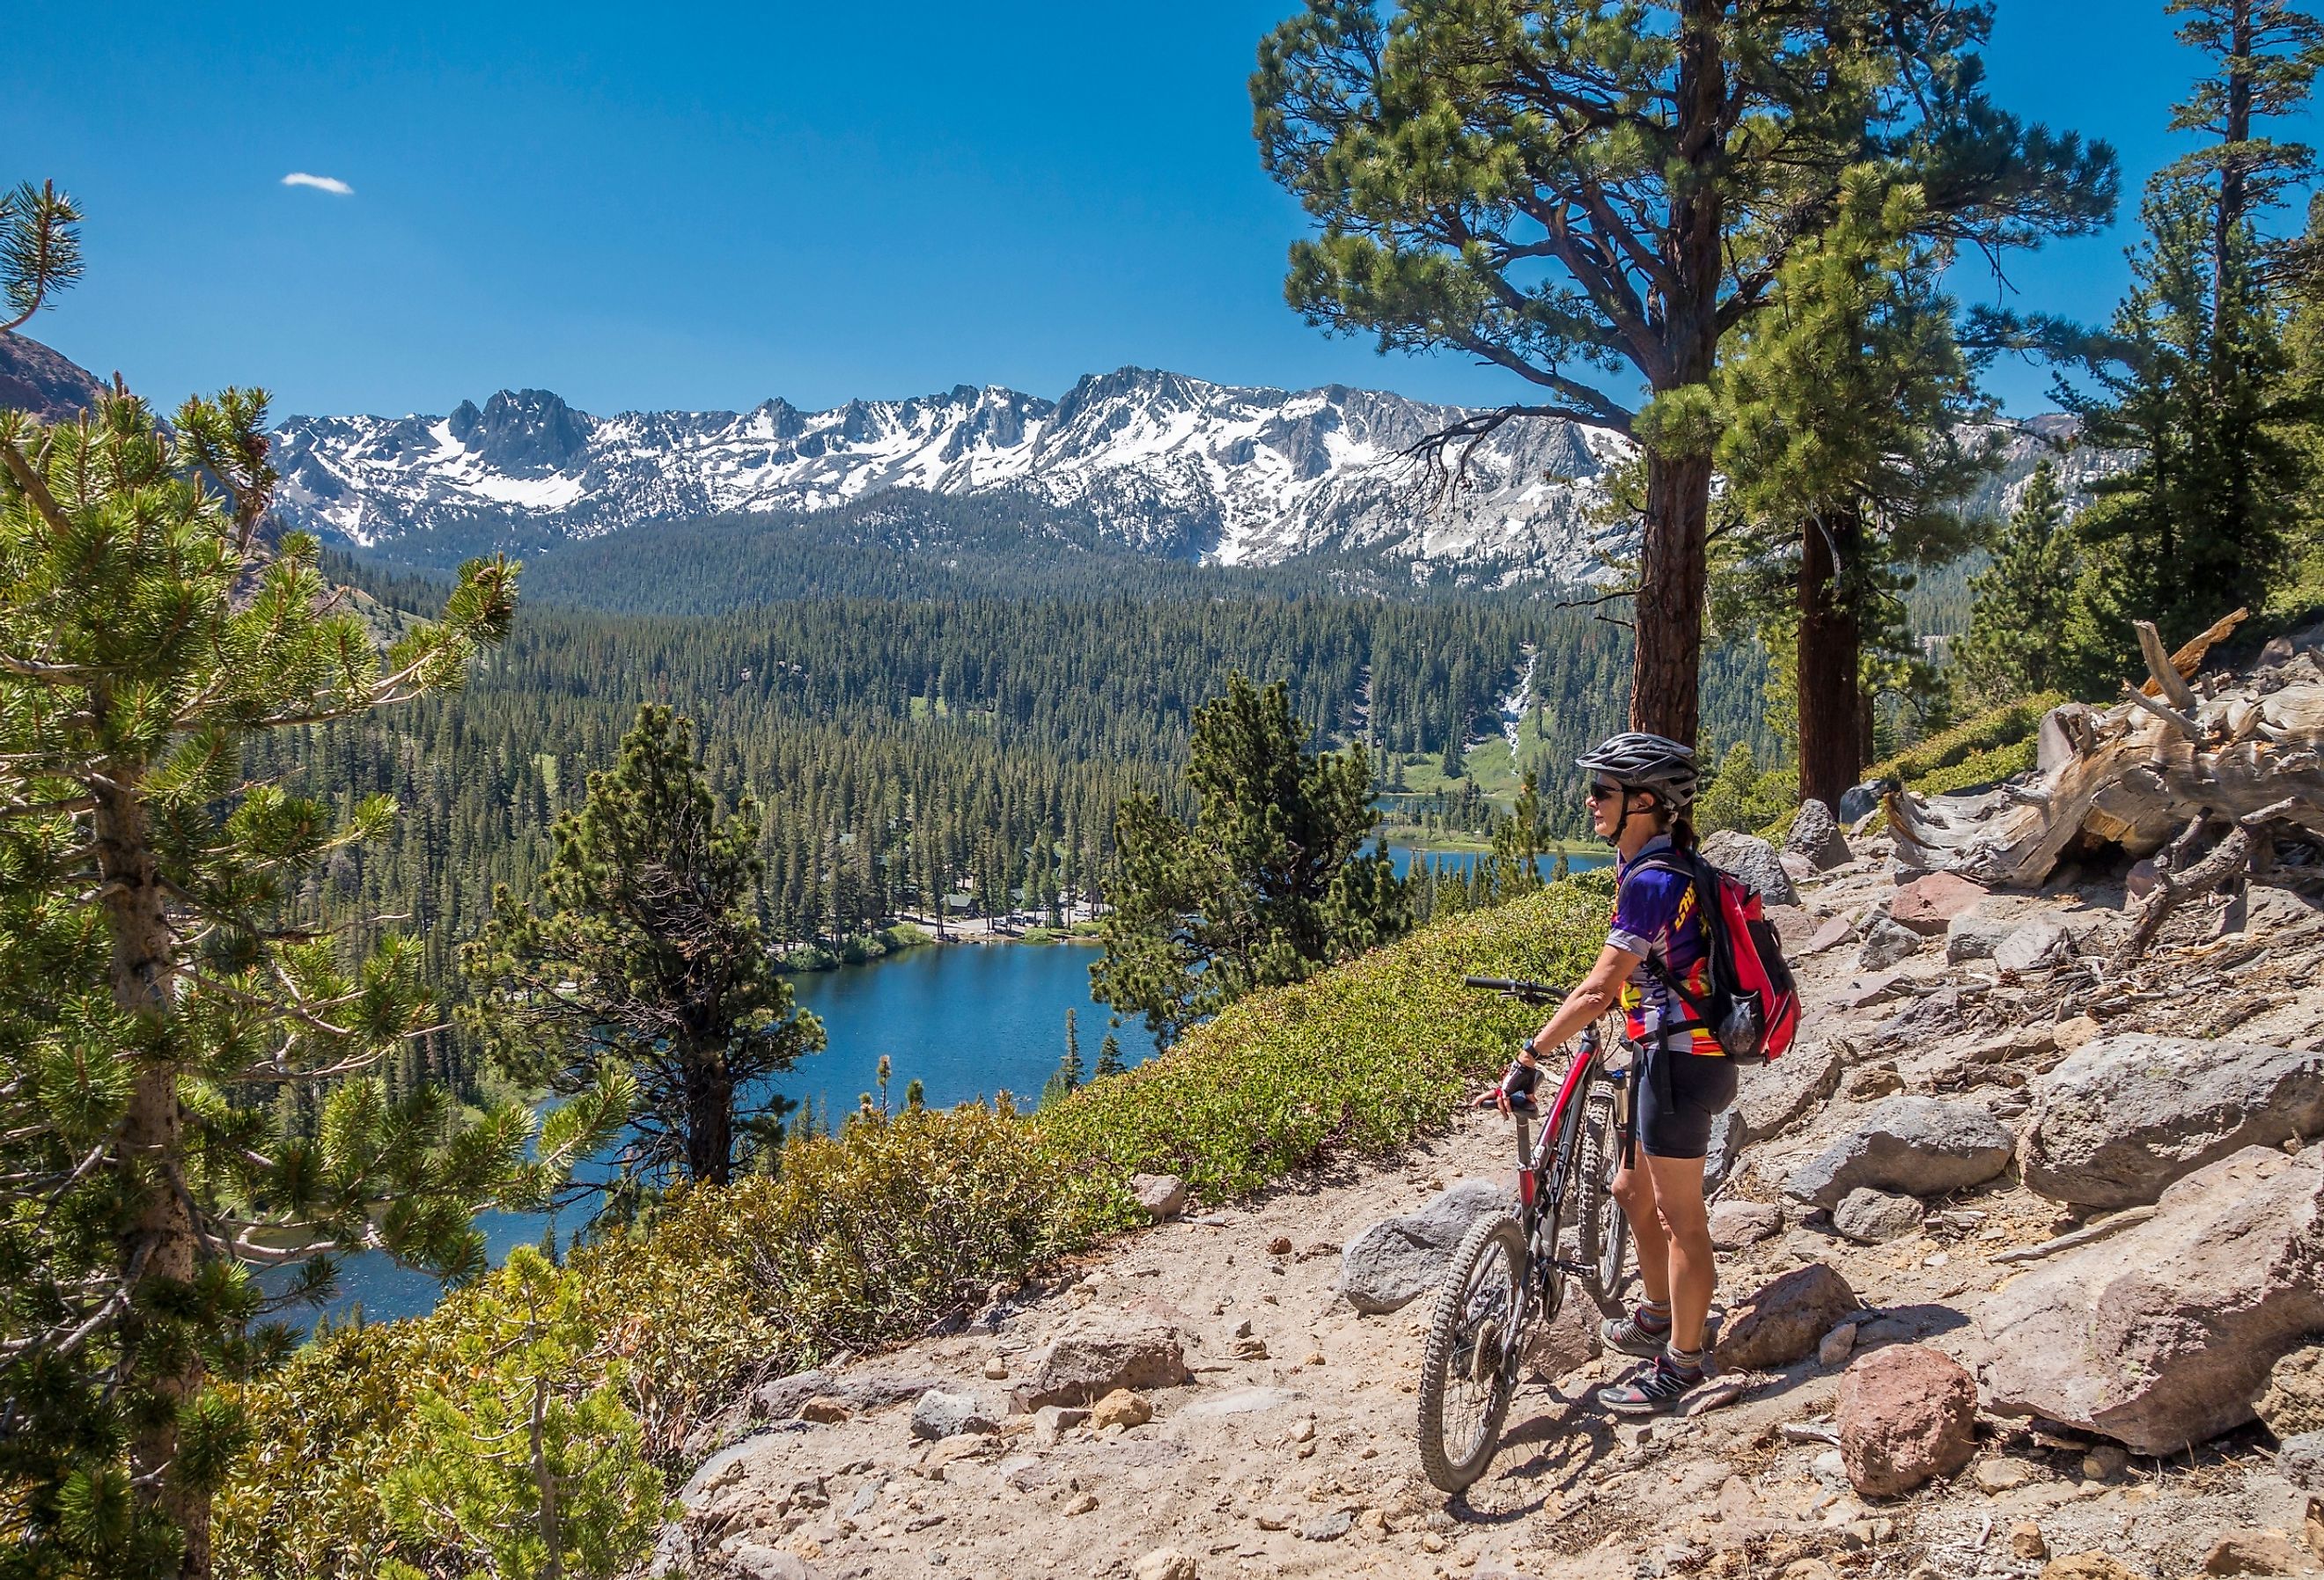 Woman on mountain bike taking in the view in Mammoth Lakes, California.